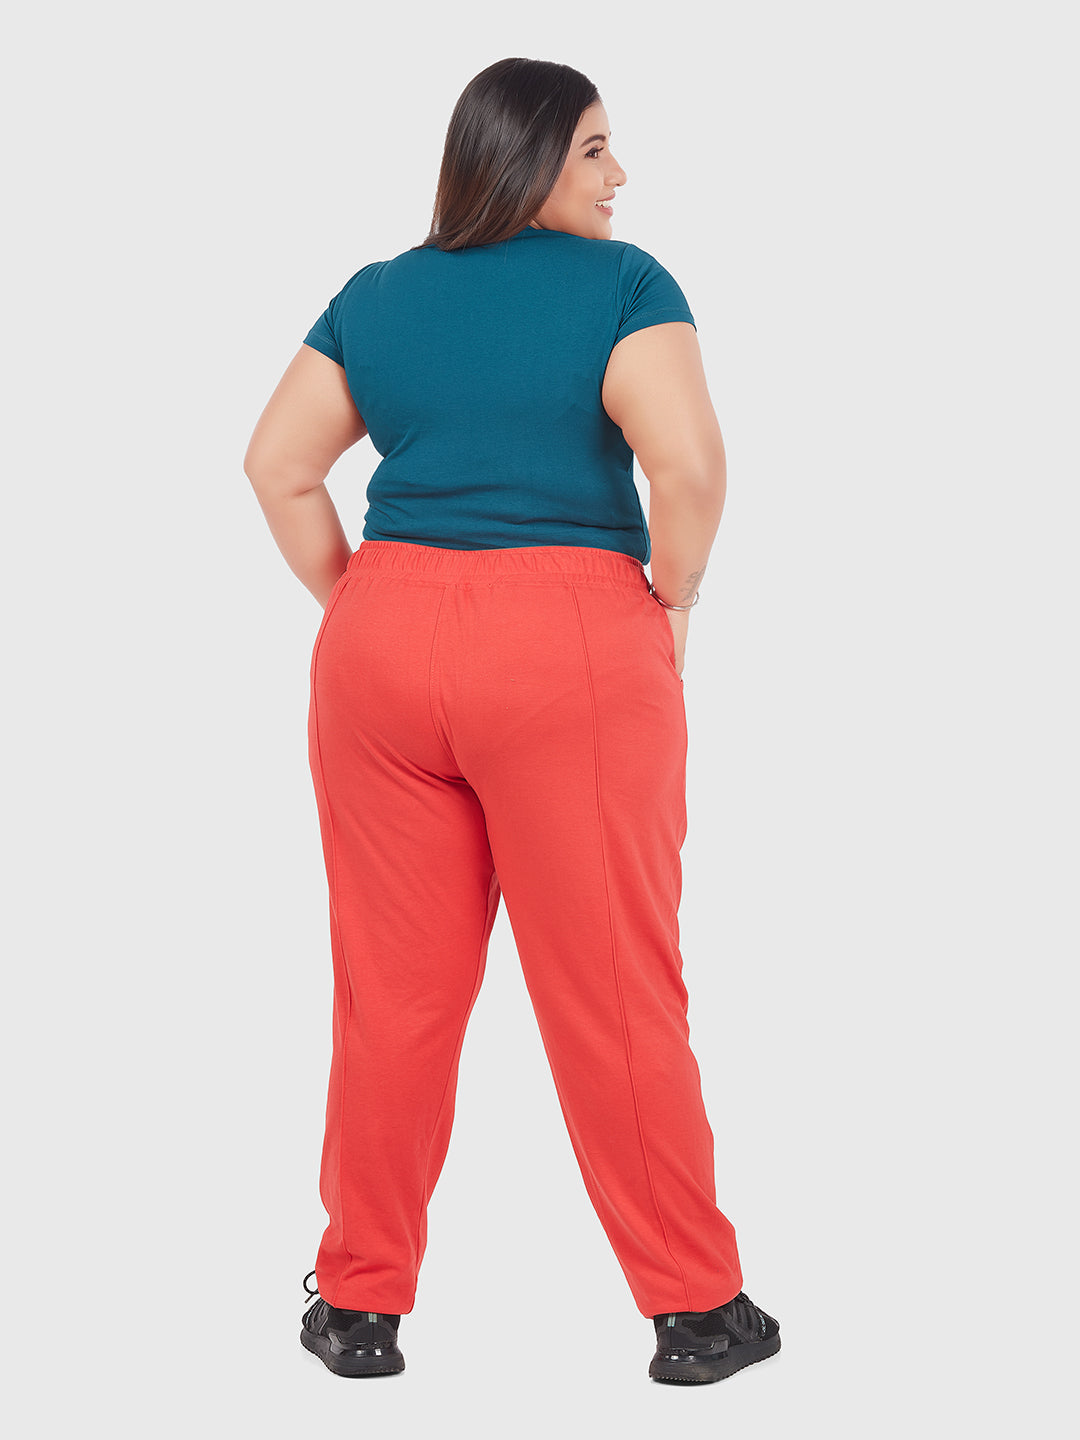 Red Pants - Buy Trendy Red Pants Online in India